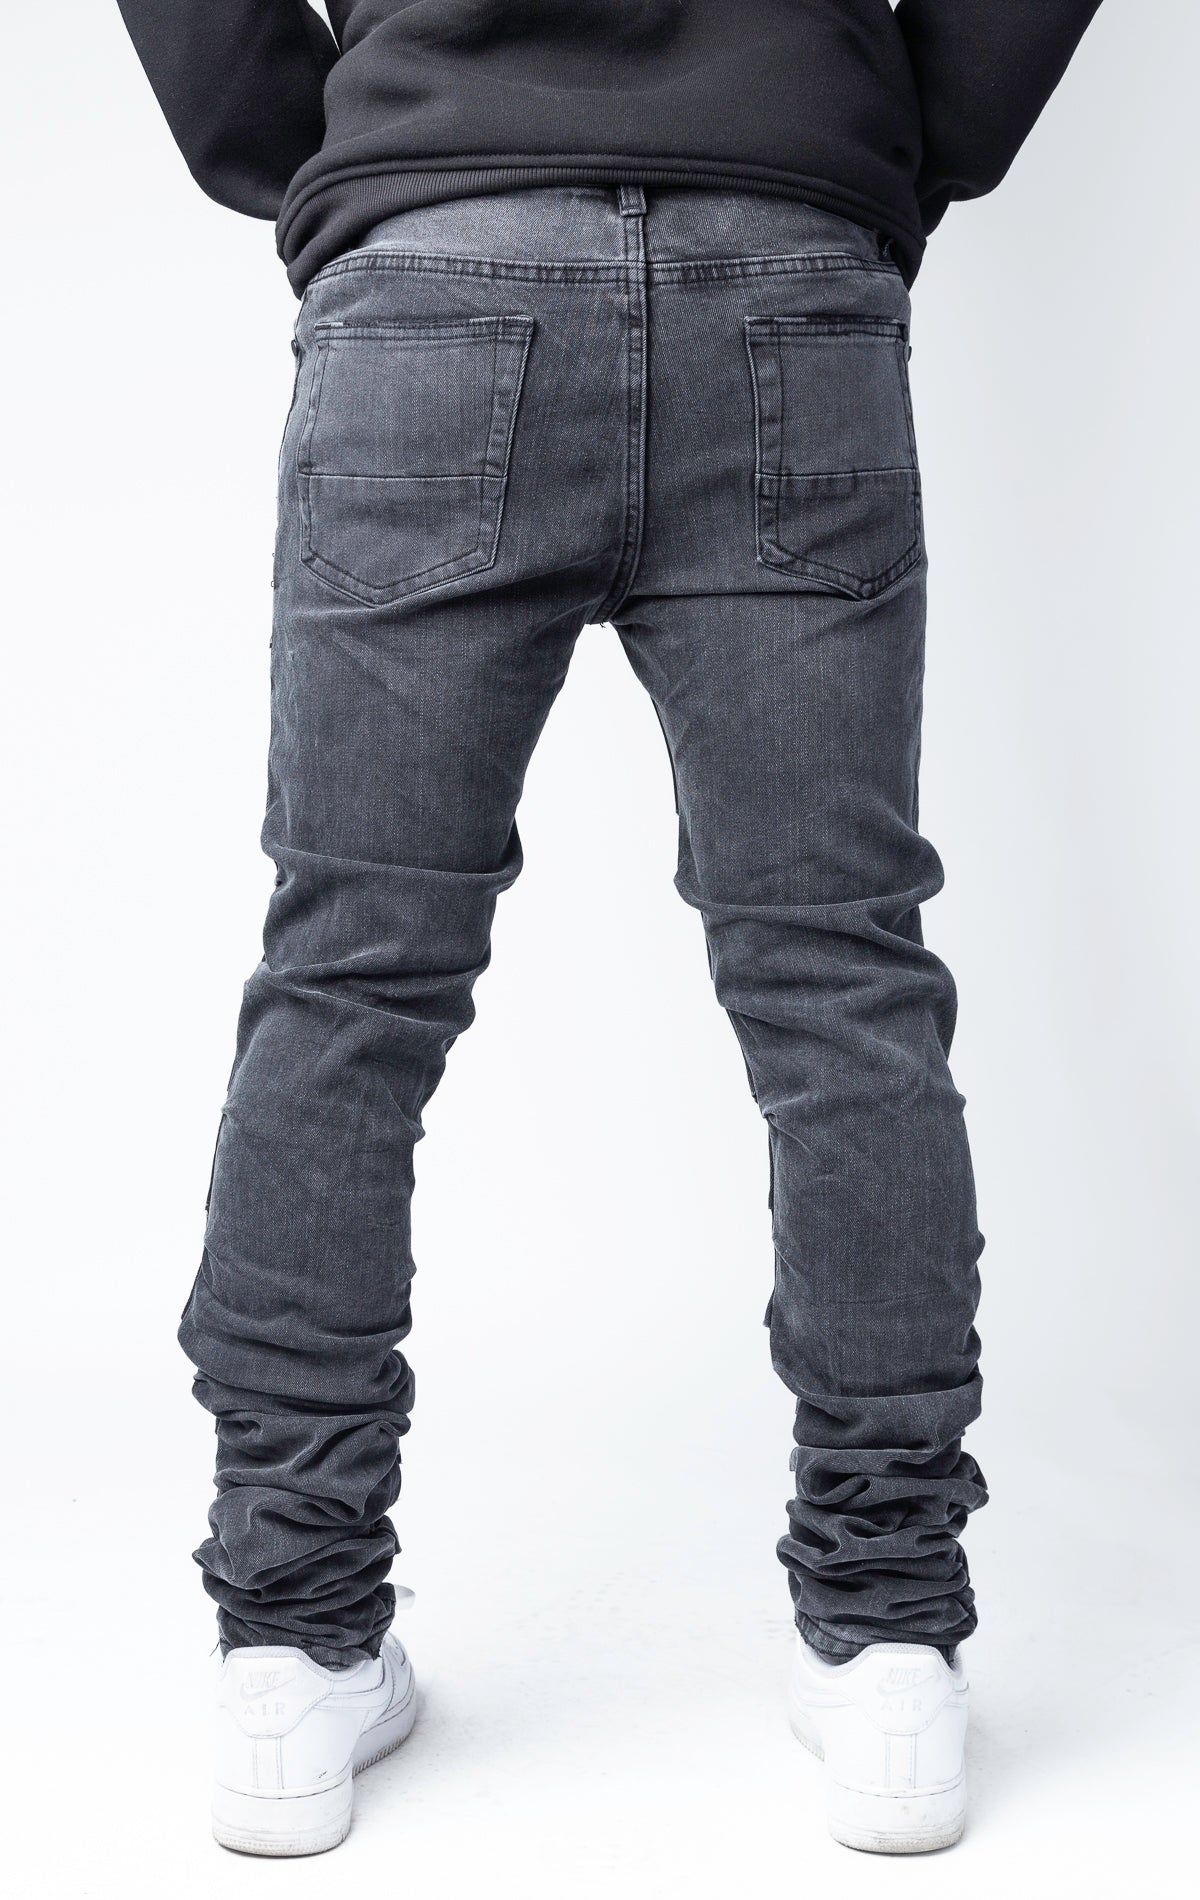  stacked skinny jeans in black wash